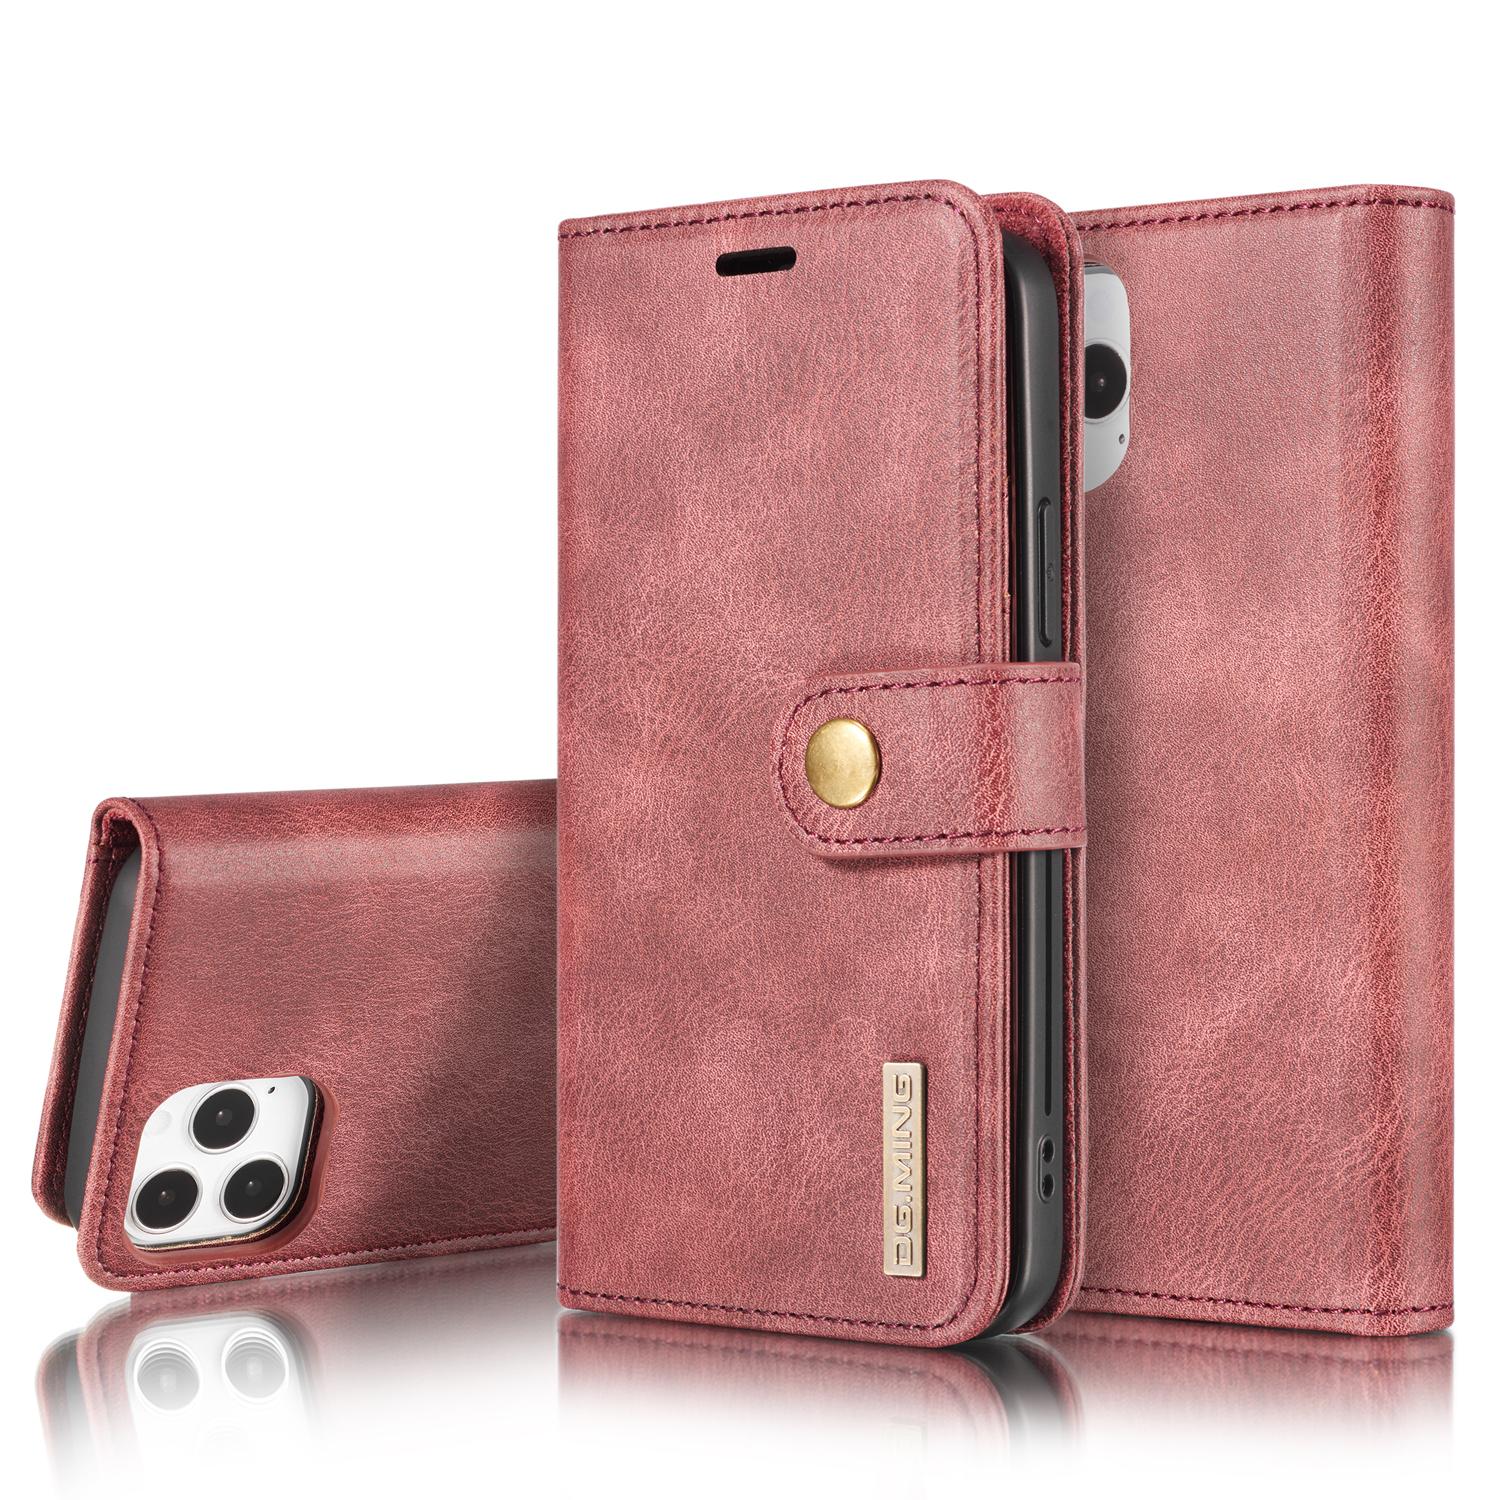 iPhone 12 Pro Max Plånboksfodral med avtagbart skal, röd